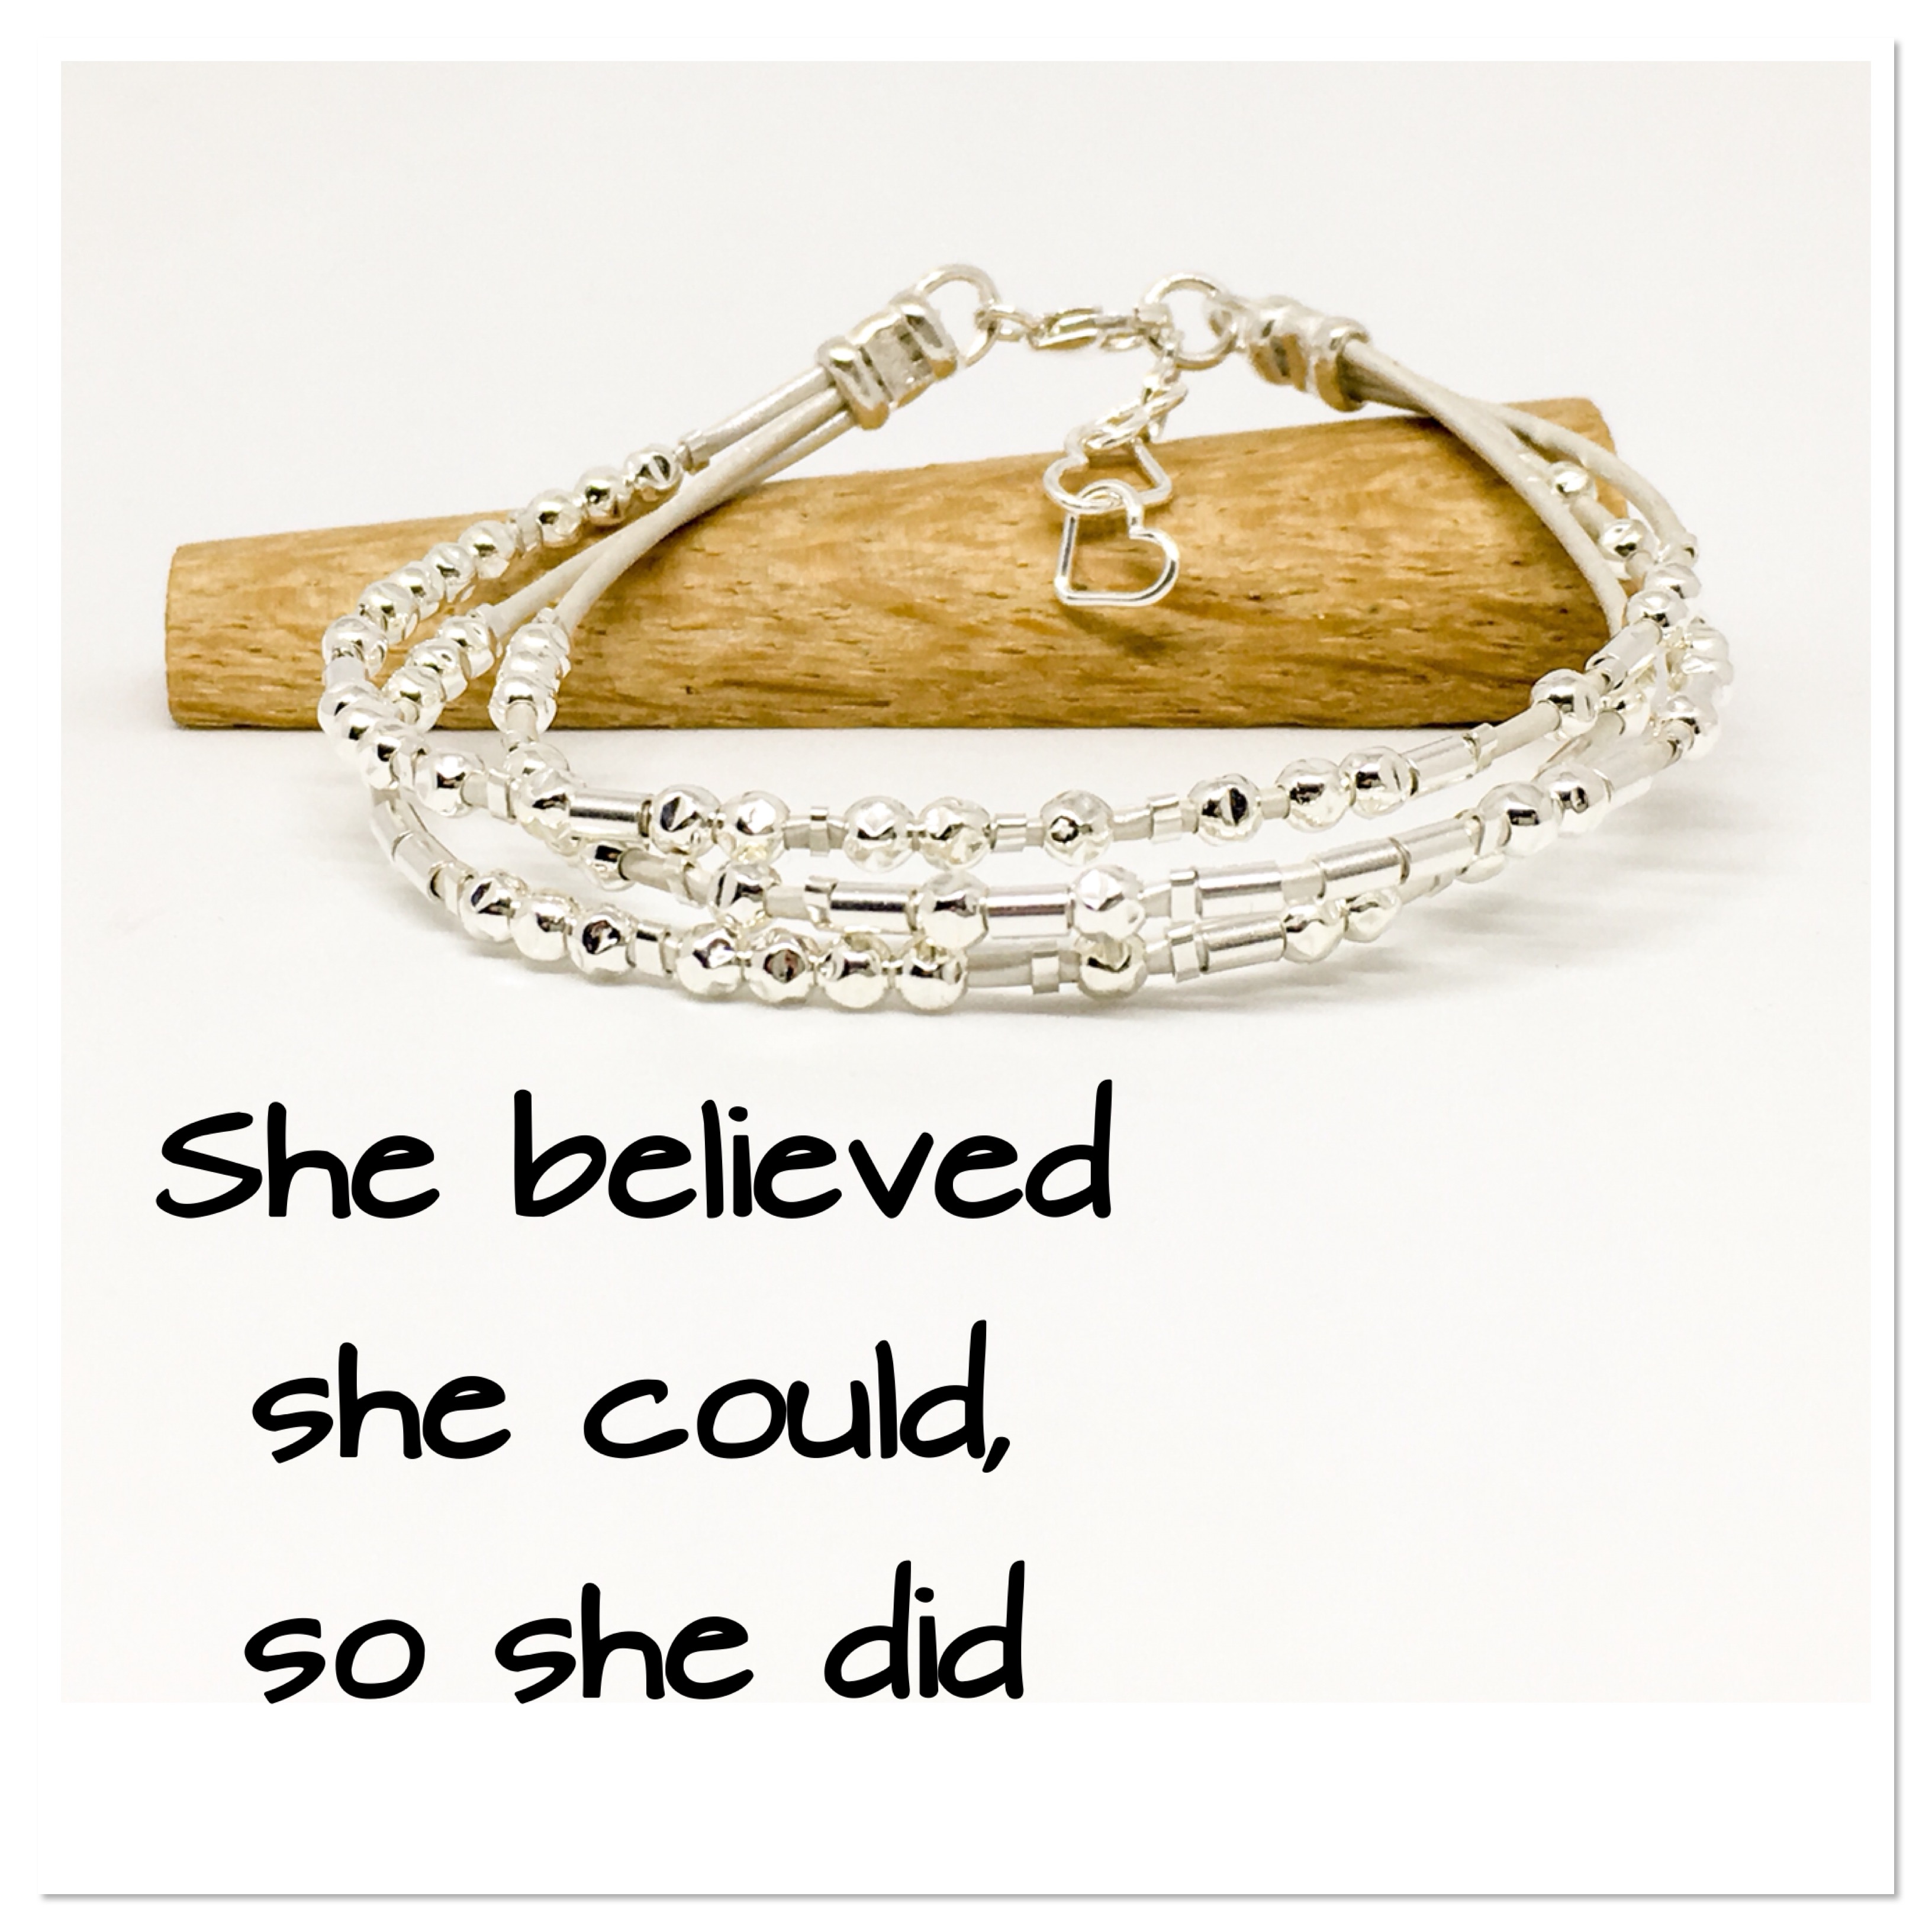 Morse code bracelet, "She believed she could, so she did"